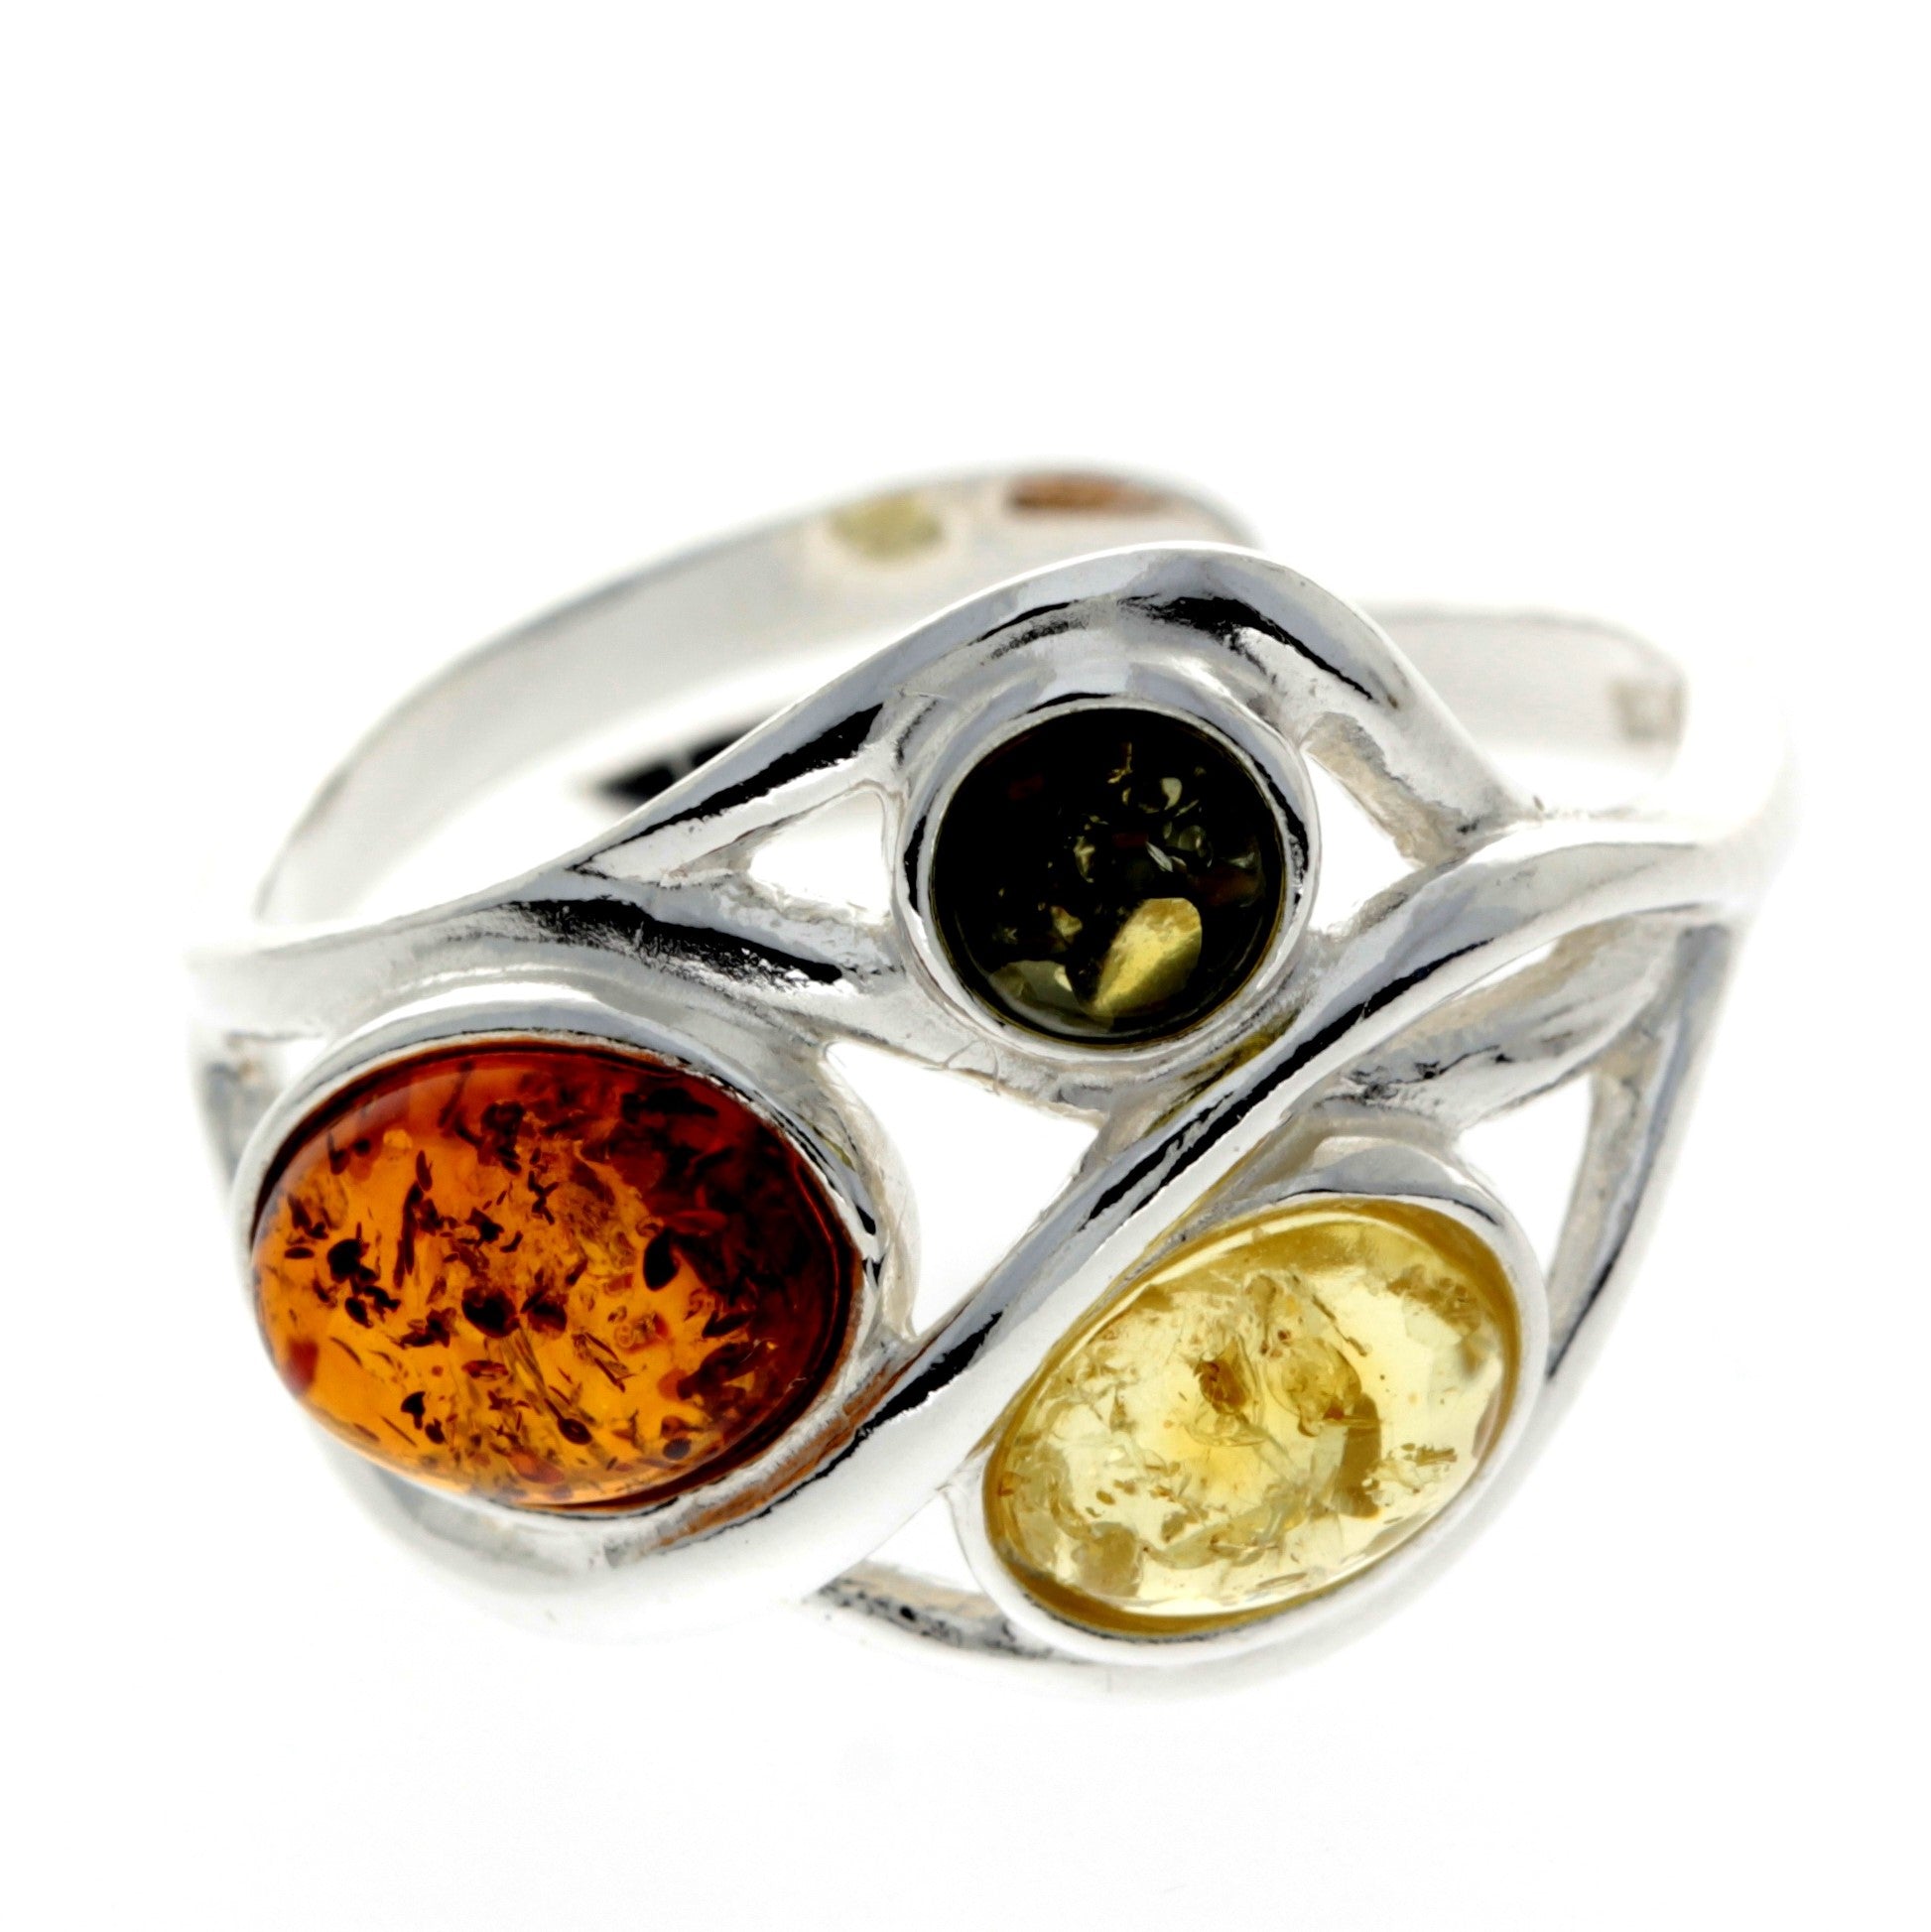 925 Sterling Silver & Baltic Amber Modern Adjustable Ring - GL481